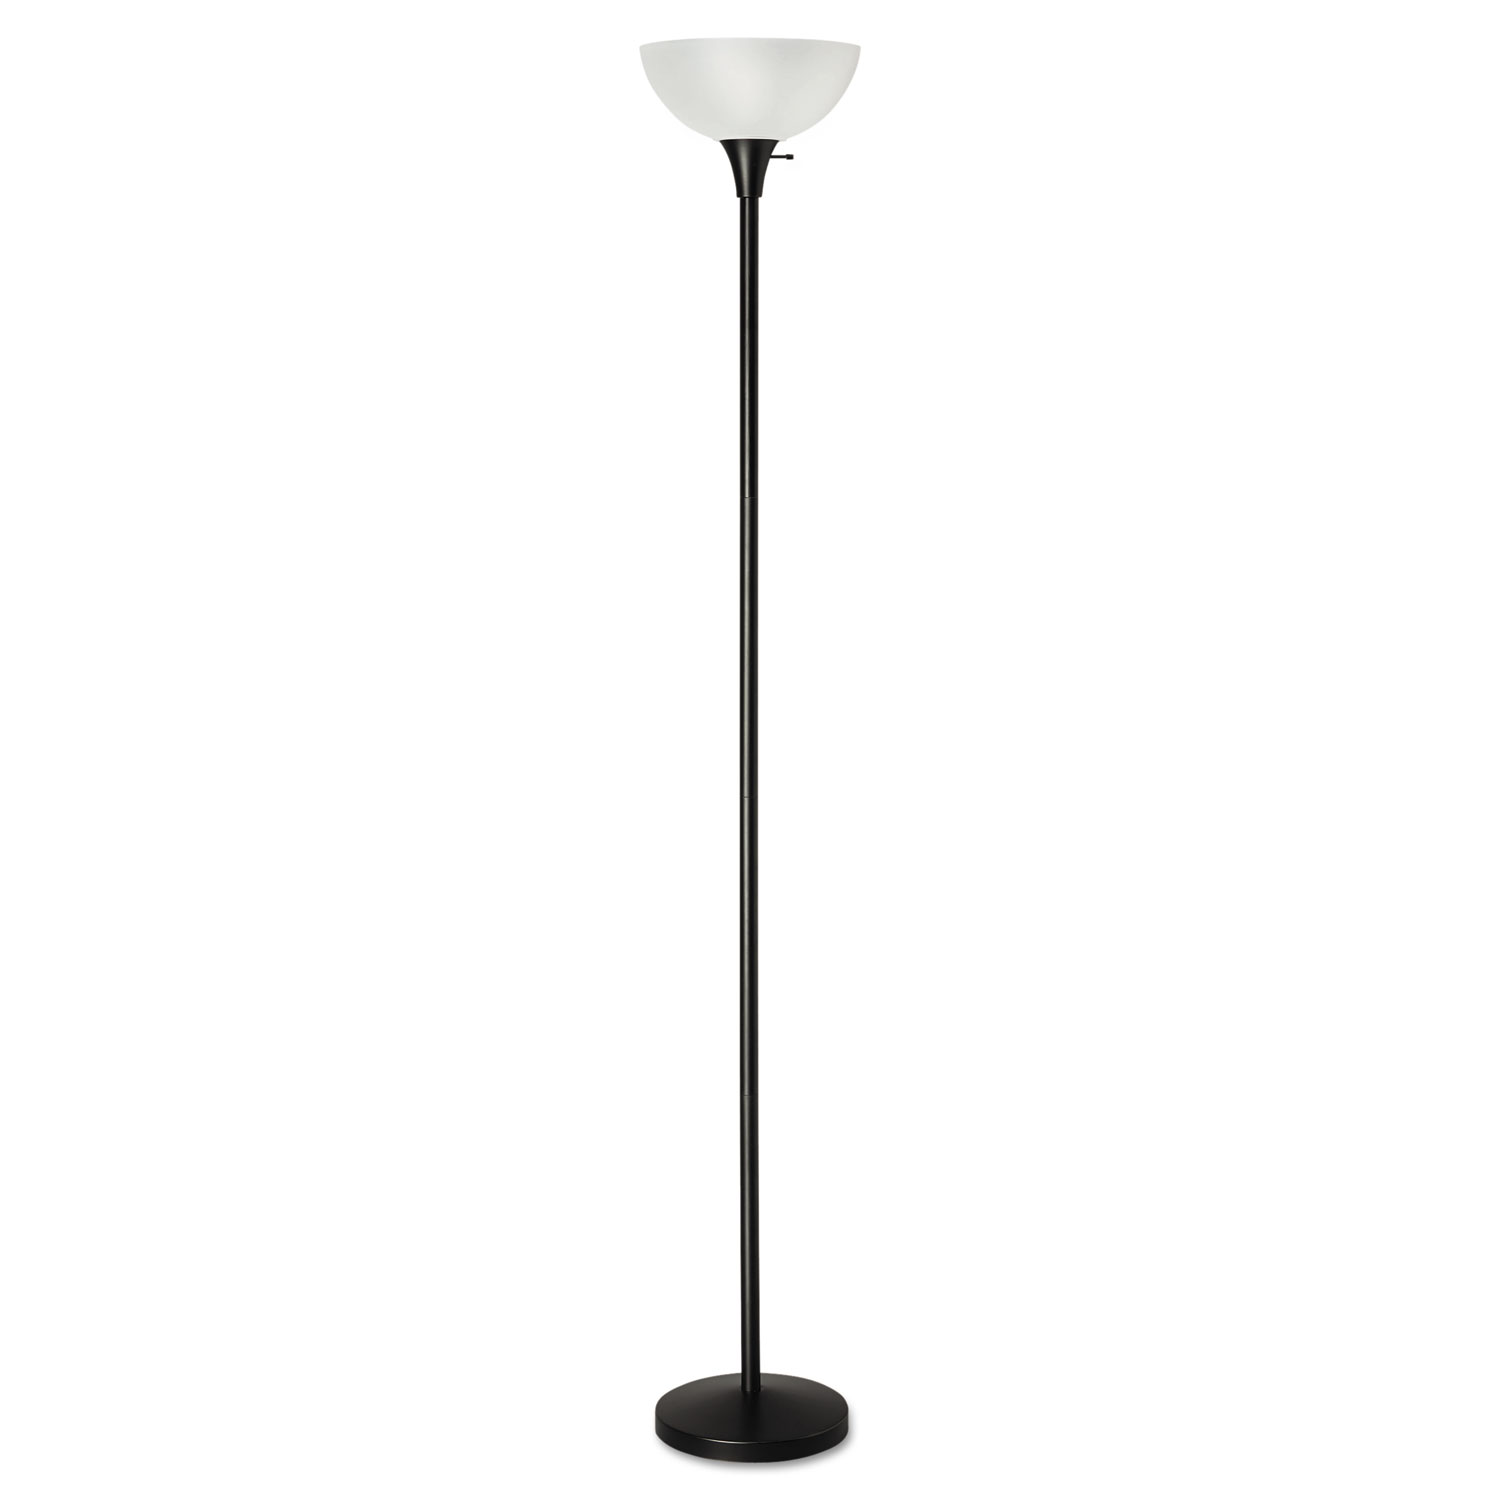  Alera ALELMPF72B Floor Lamp, 71 High, Translucent Plastic Shade, 11.25w x 11.25d x 71h, Matte Black (ALELMPF72B) 